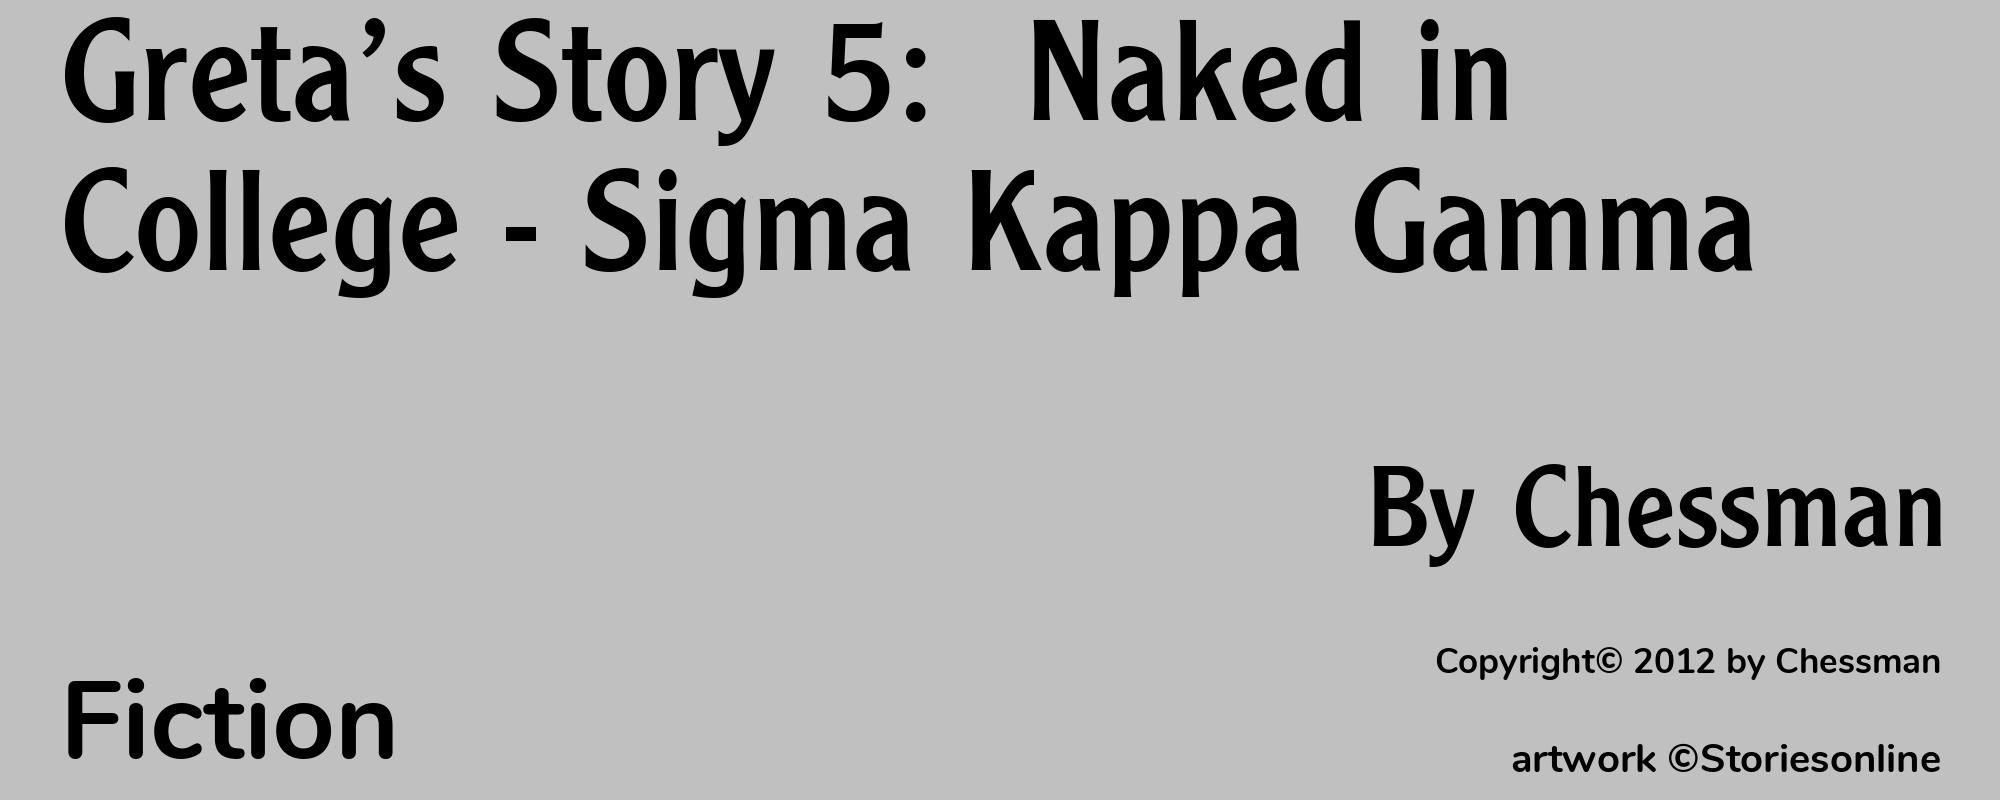 Greta’s Story 5:  Naked in College - Sigma Kappa Gamma - Cover